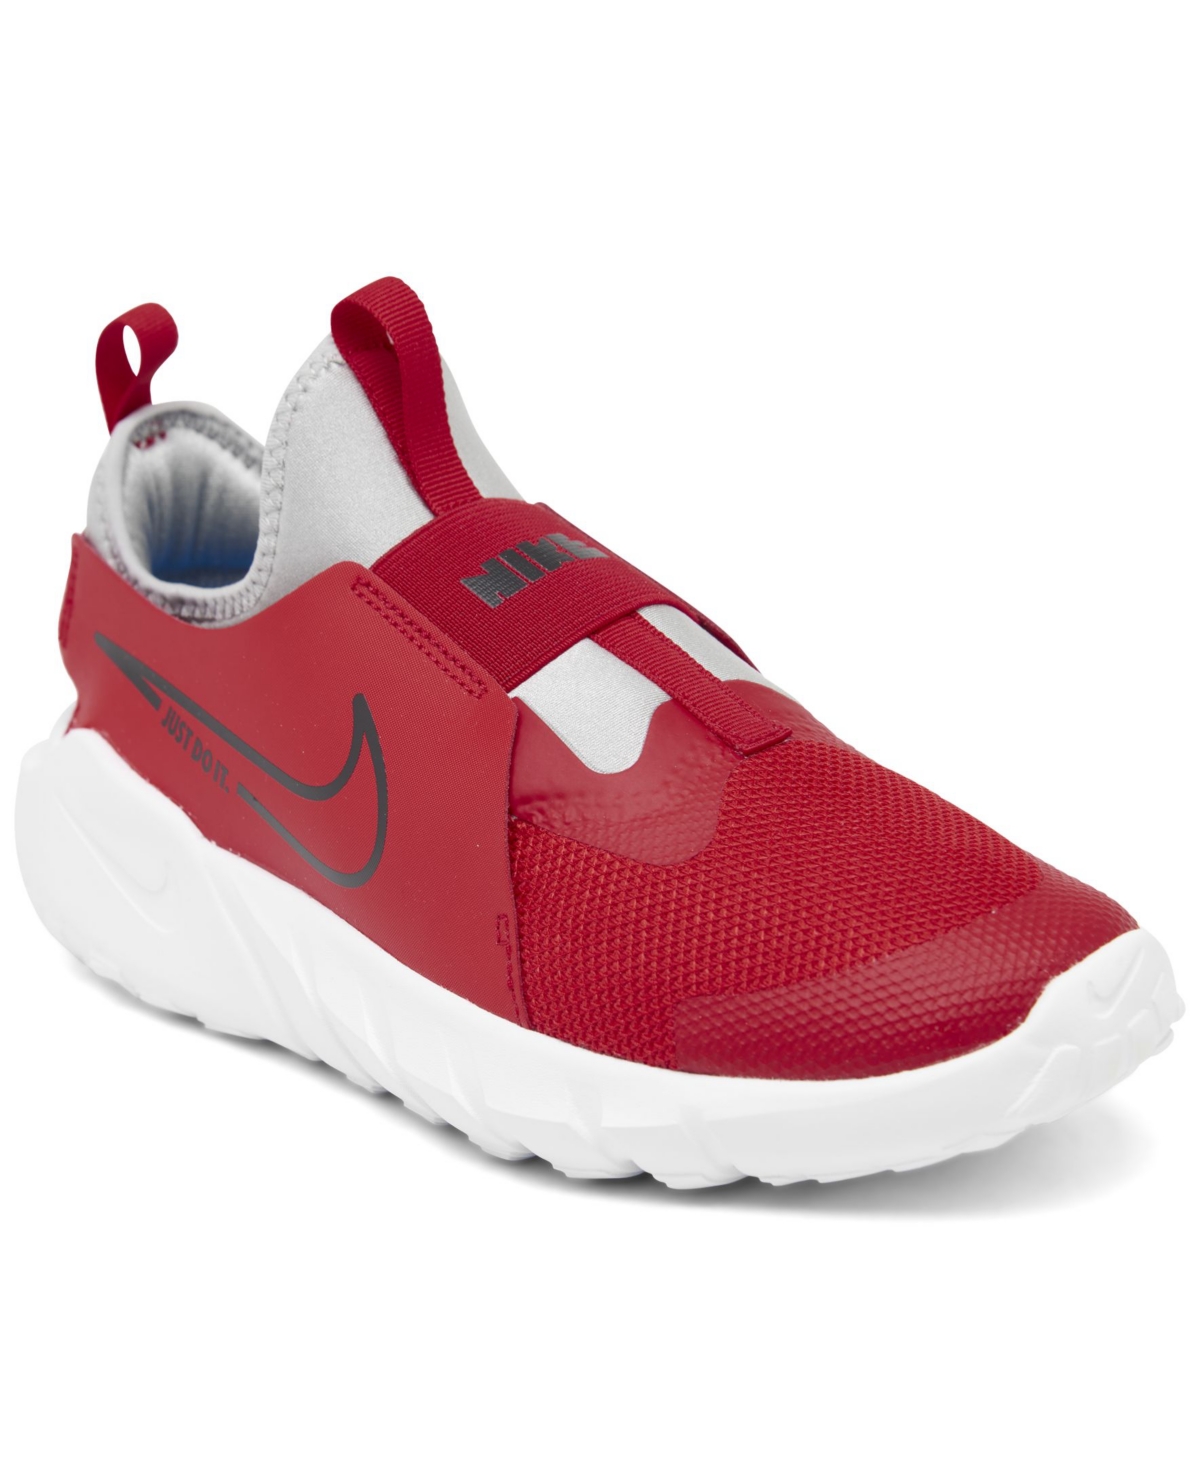 Nike Big Kid's Flex Runner 2 Slip-on Running Sneakers From Finish Line In Red,gray,blue,black